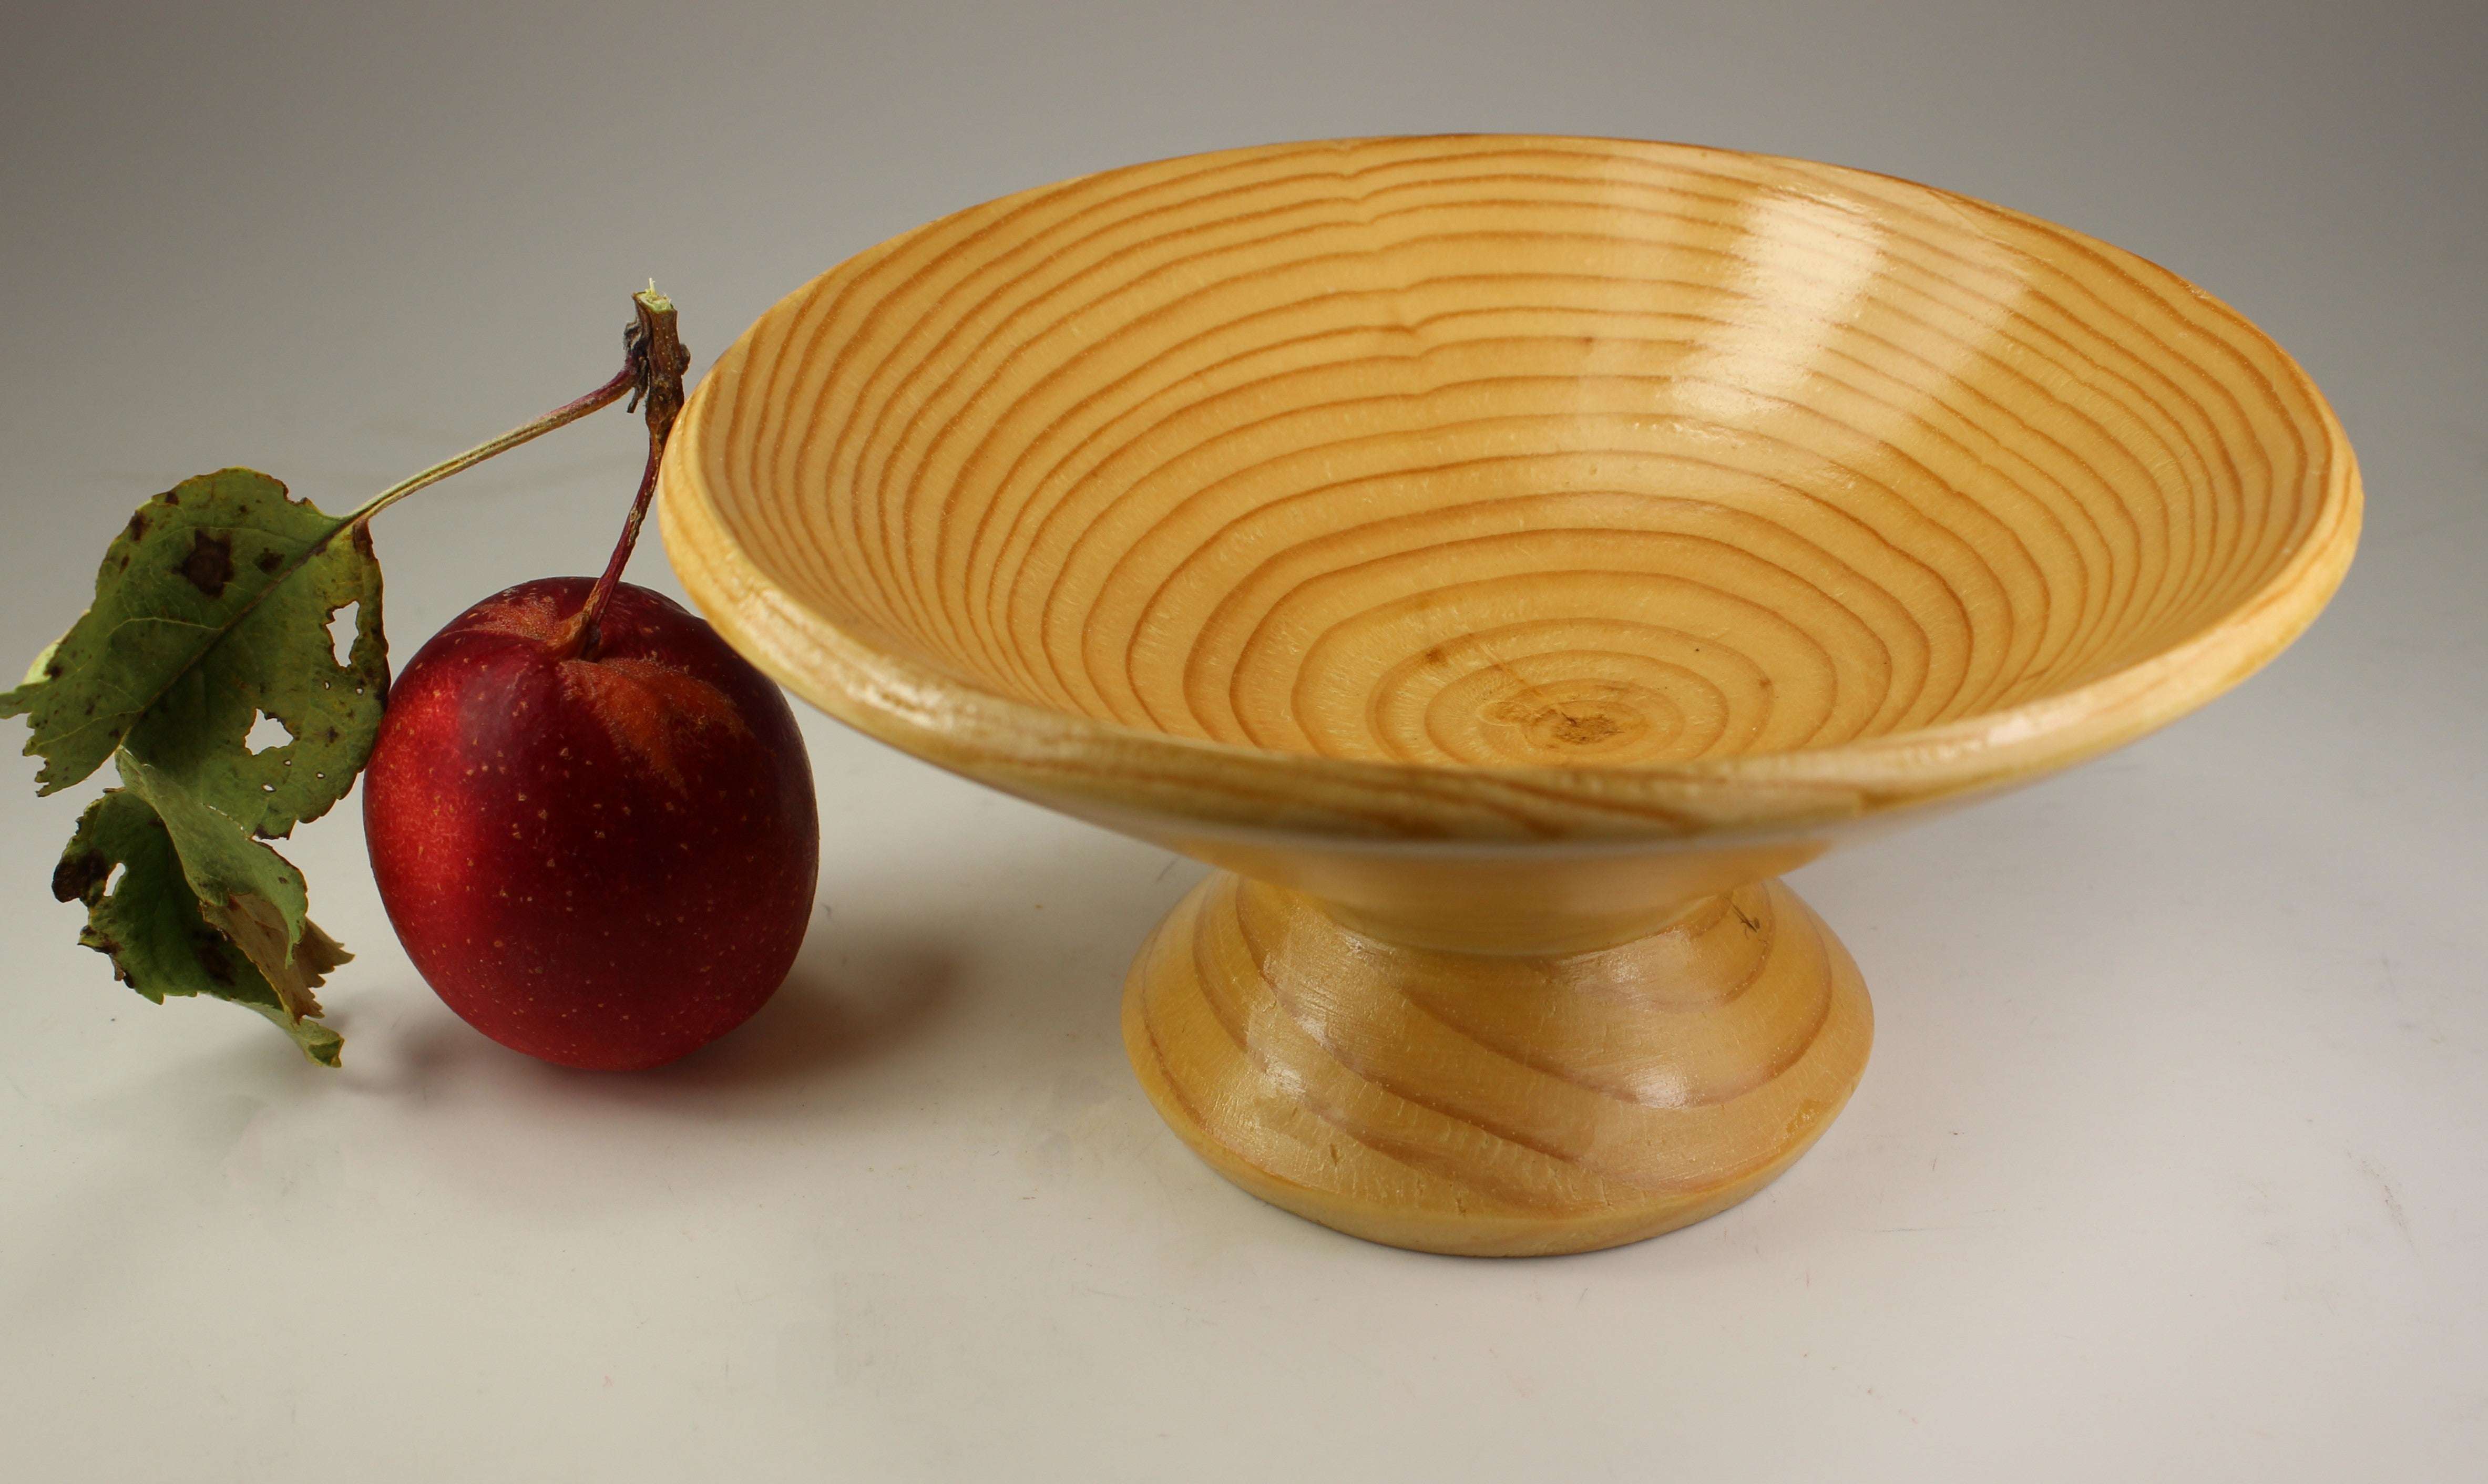 Cypress wood bowl